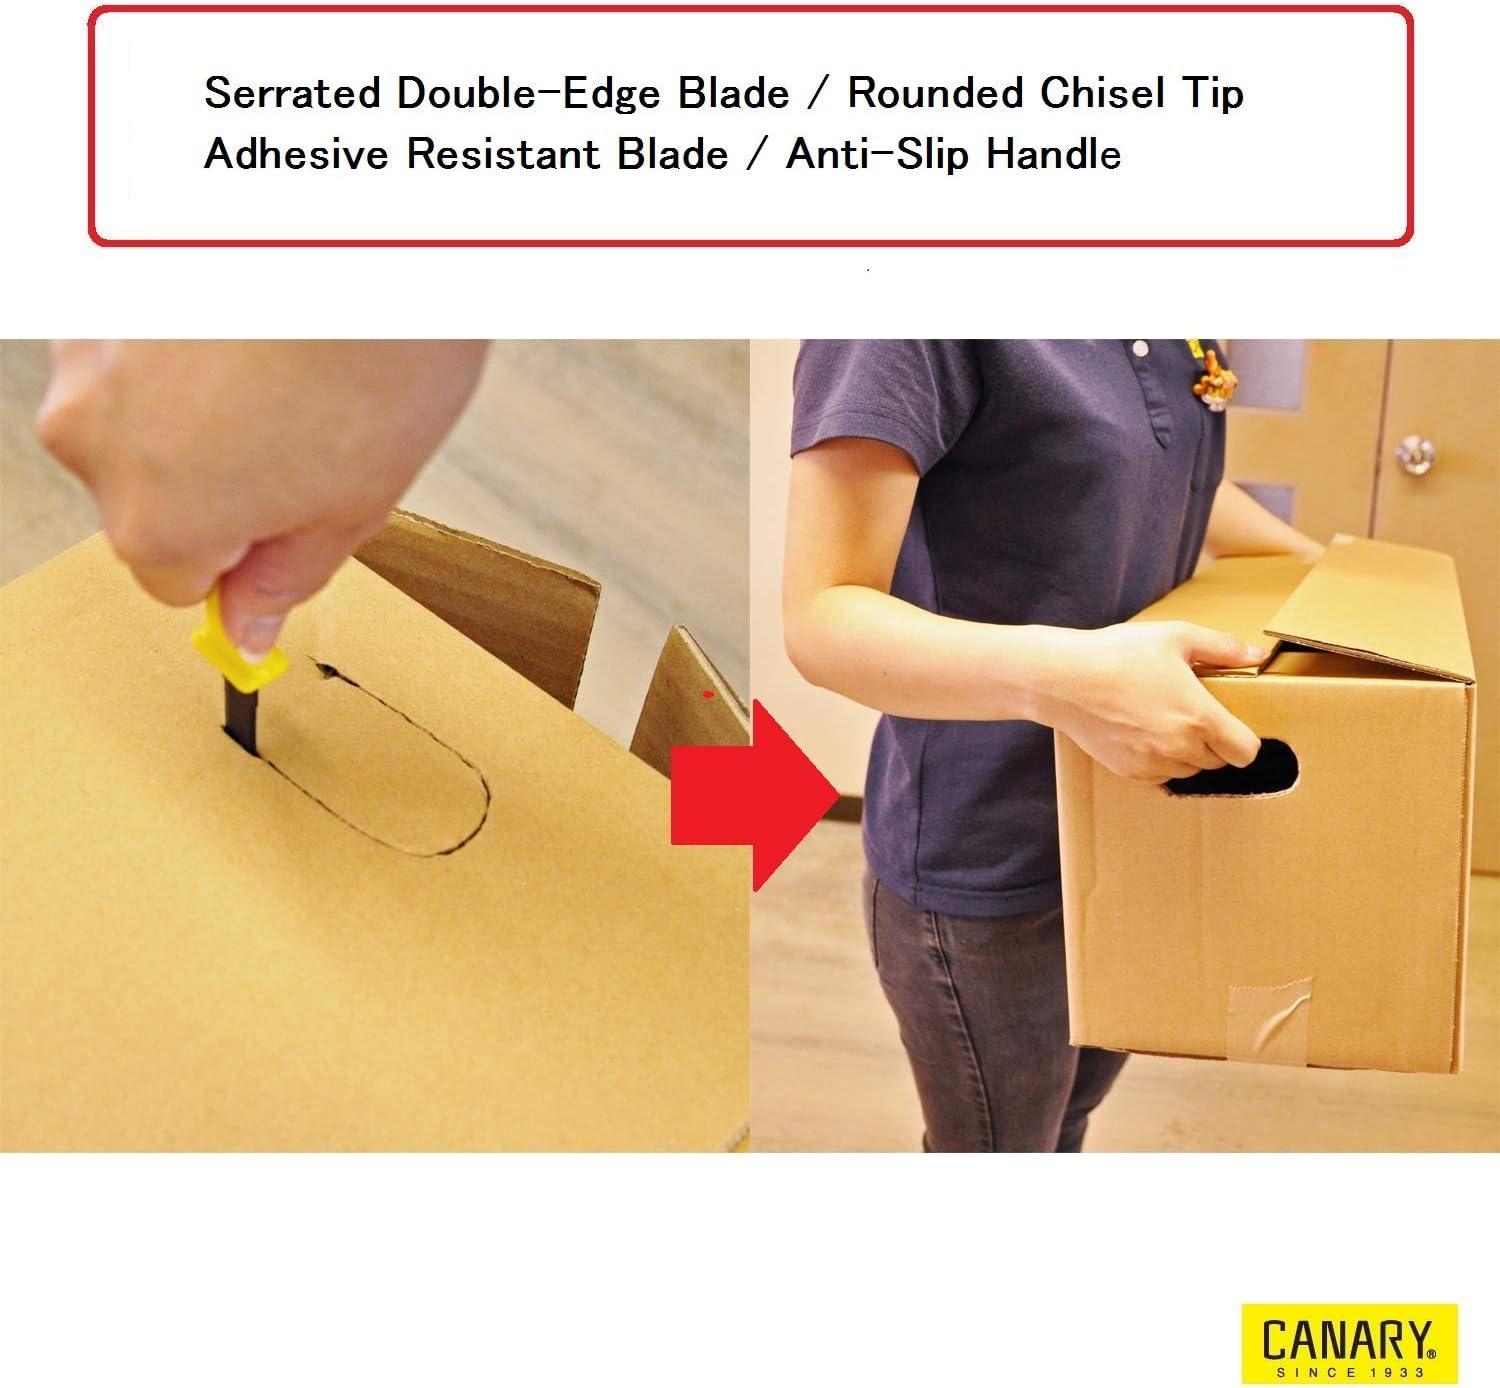 CANARYCorrugated Cardboard Scissors, Heavy Duty Craft Scissors